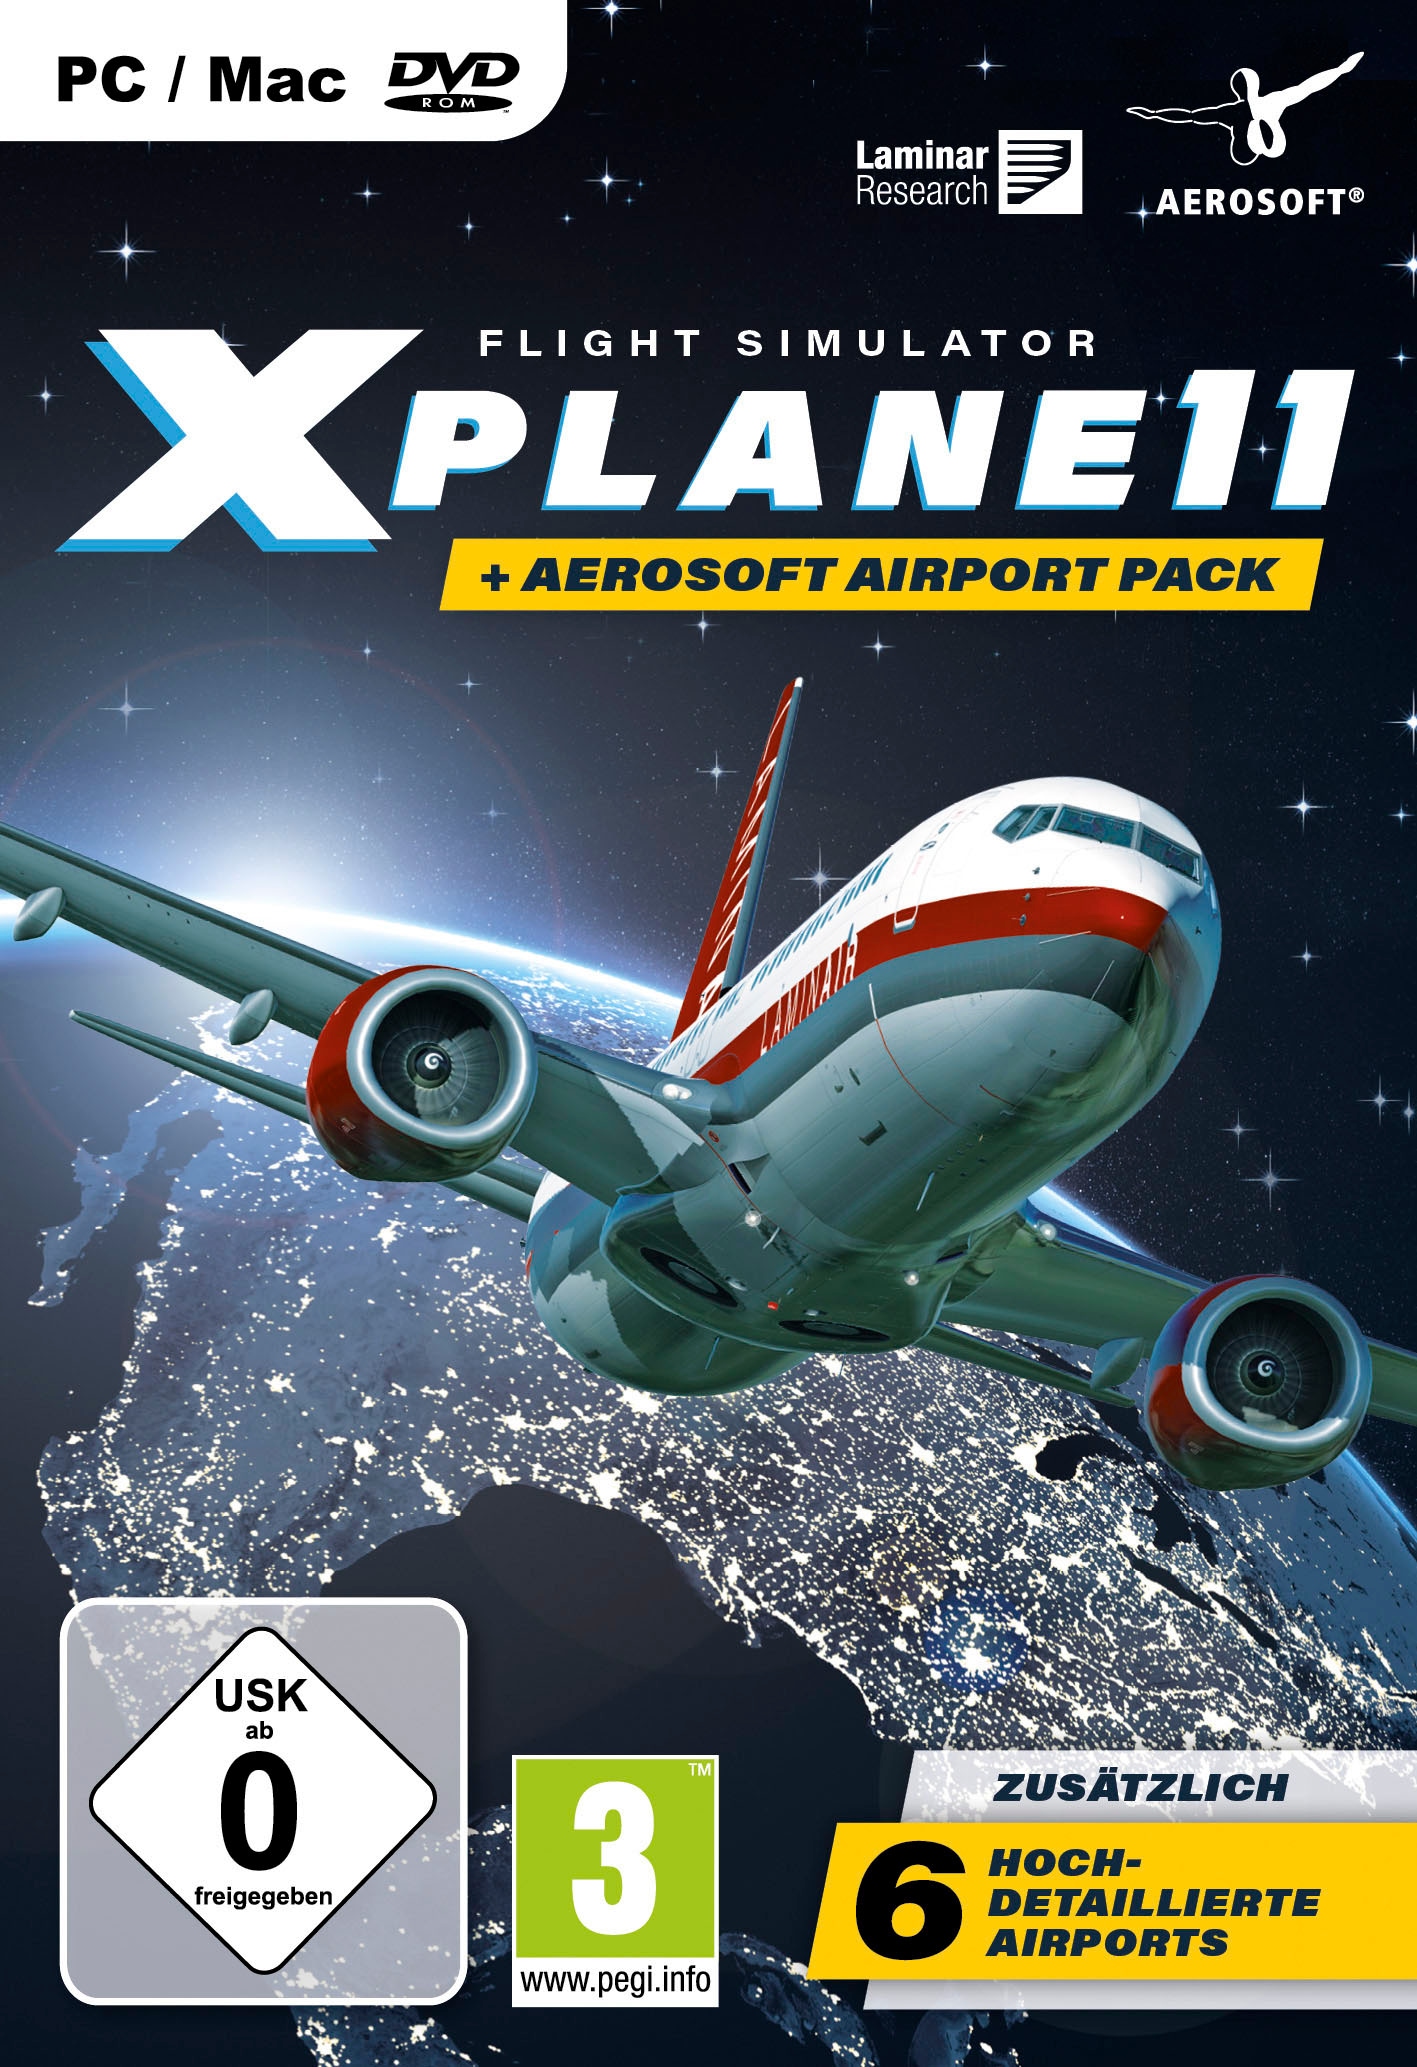 aerosoft Spielesoftware »XPlane 11 + Aerosoft Pack«, PC